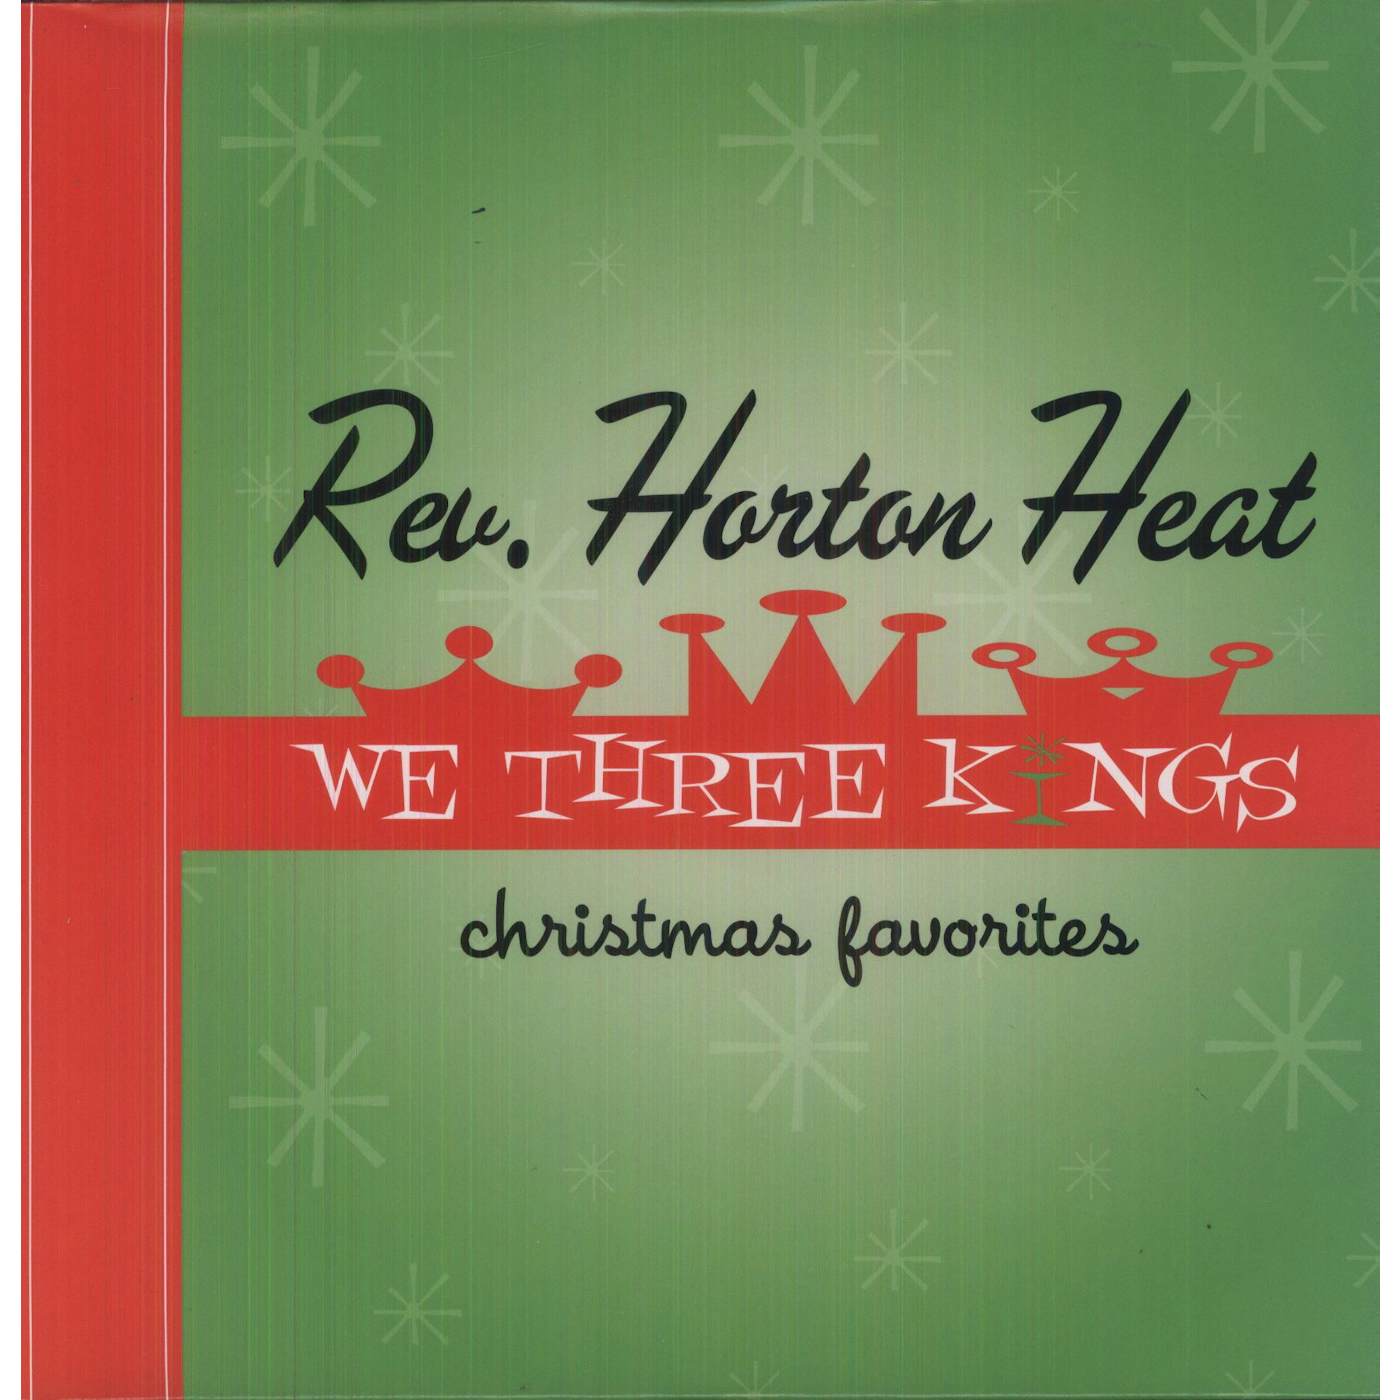 The Reverend Horton Heat We Three Kings Vinyl Record